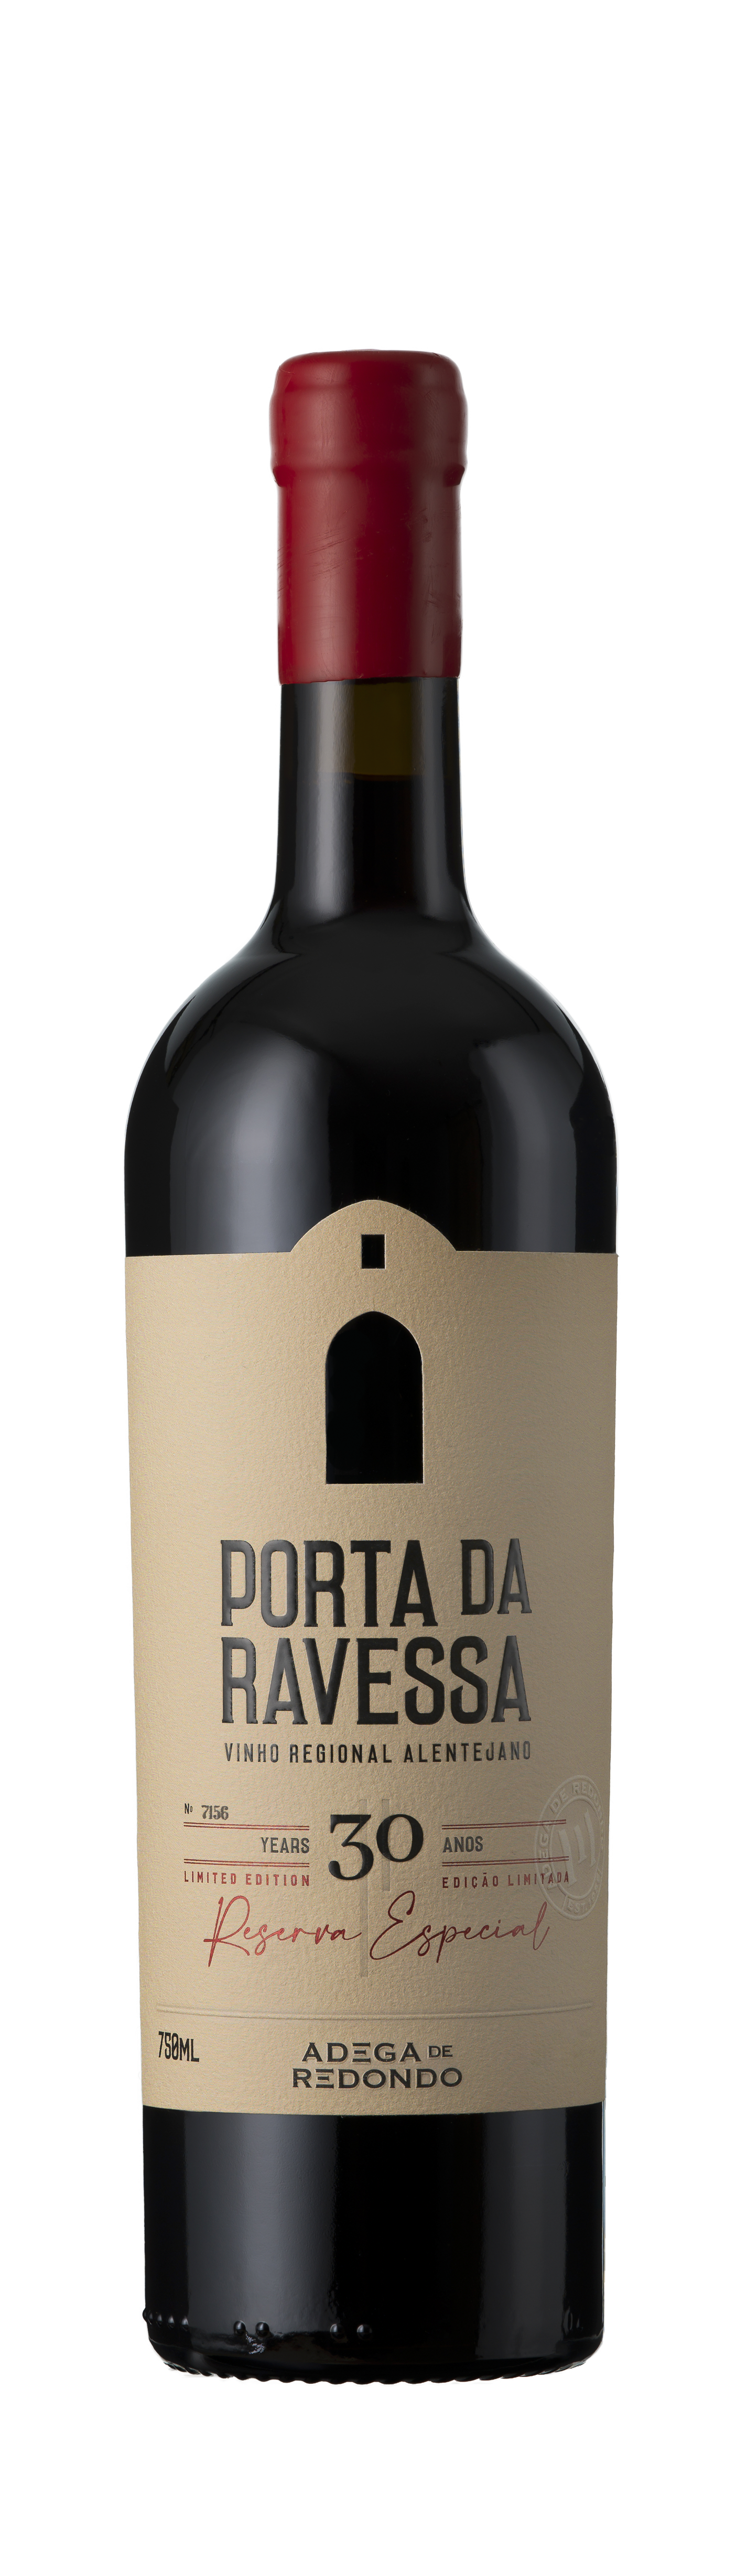 Adega de Redondo, Porta da Ravessa Reserva especial Tinto (30 year anniversary edition), Vinho Regional Alentejano, Portugal, 2017